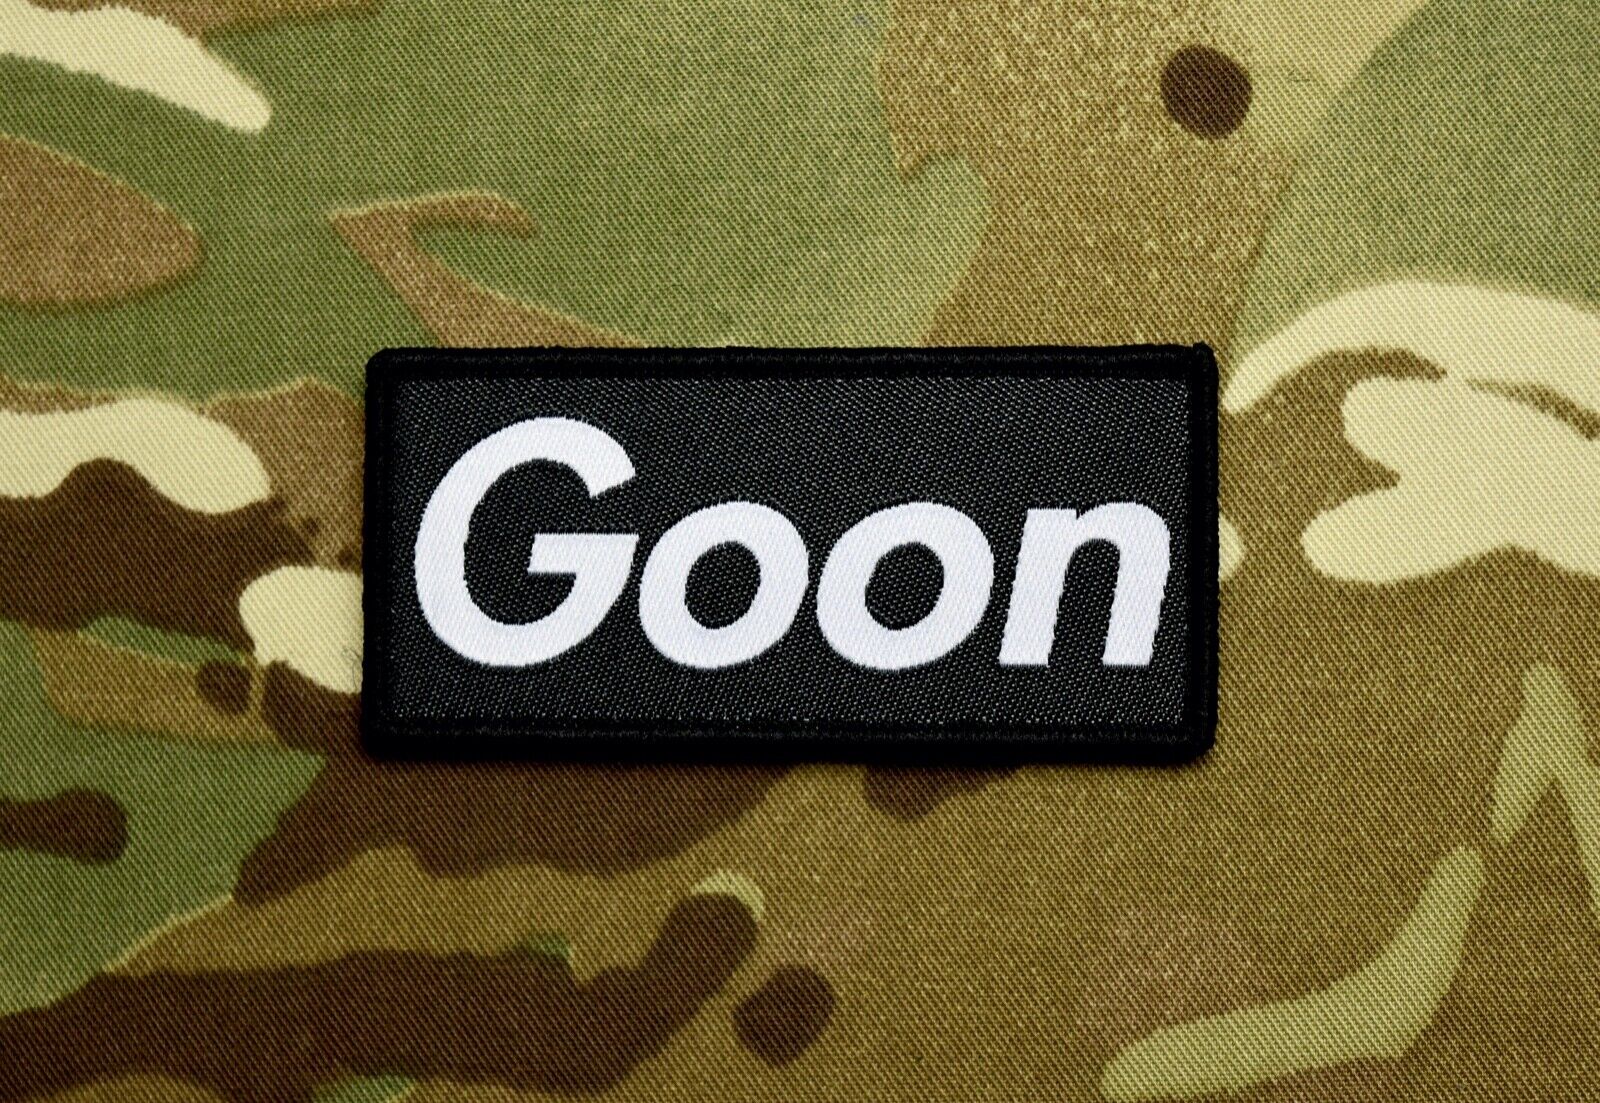 Goon Woven Morale Uniform Patch B&W NVGs OAF Tactical Cap Operator Hook/Loop